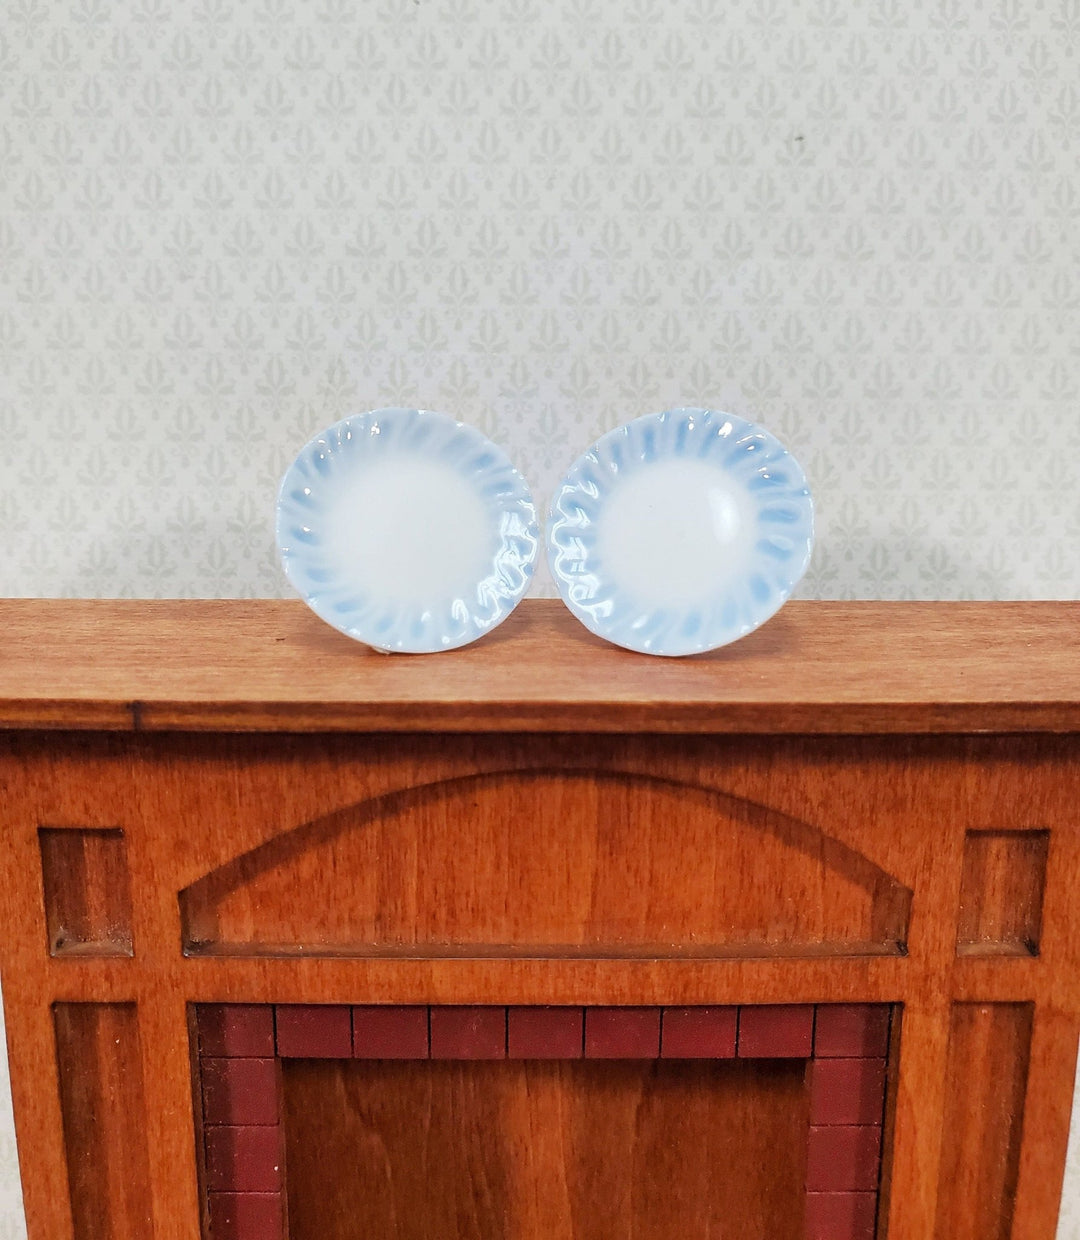 Dollhouse Dinner Plates White Ceramic with Blue Edge Set of 2 1:12 Scale 15/16" - Miniature Crush